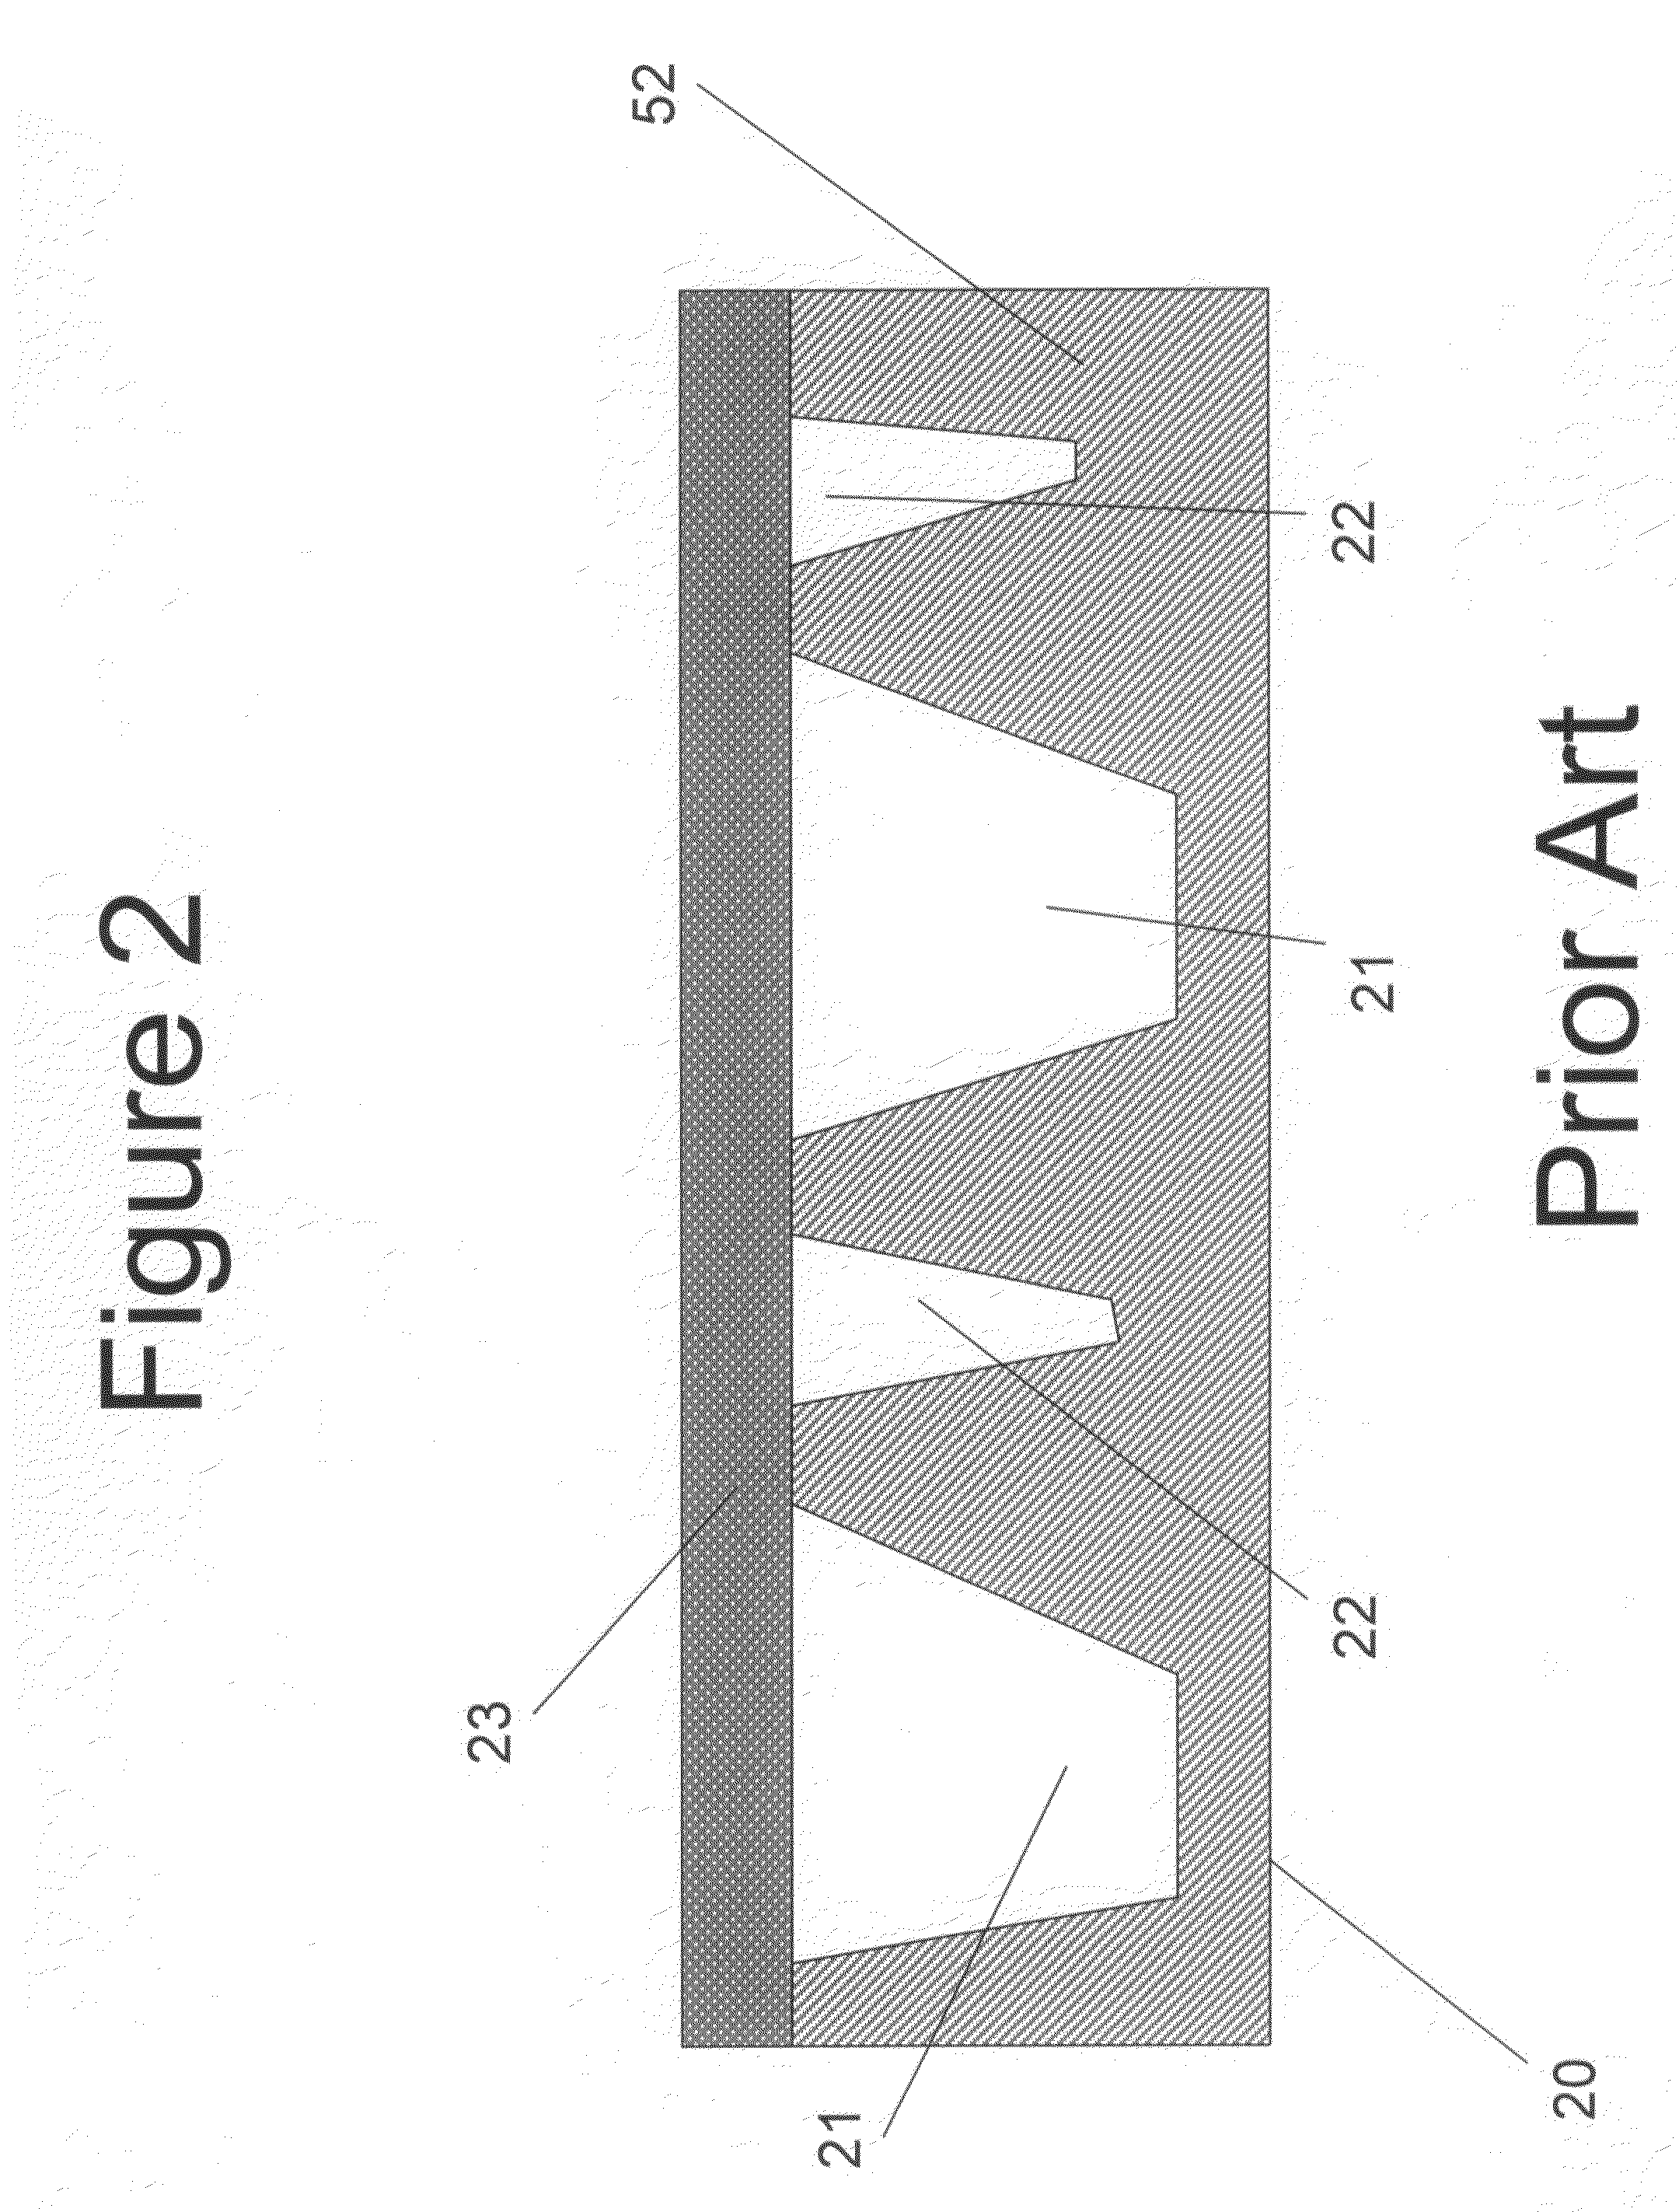 Engraving of printing plates